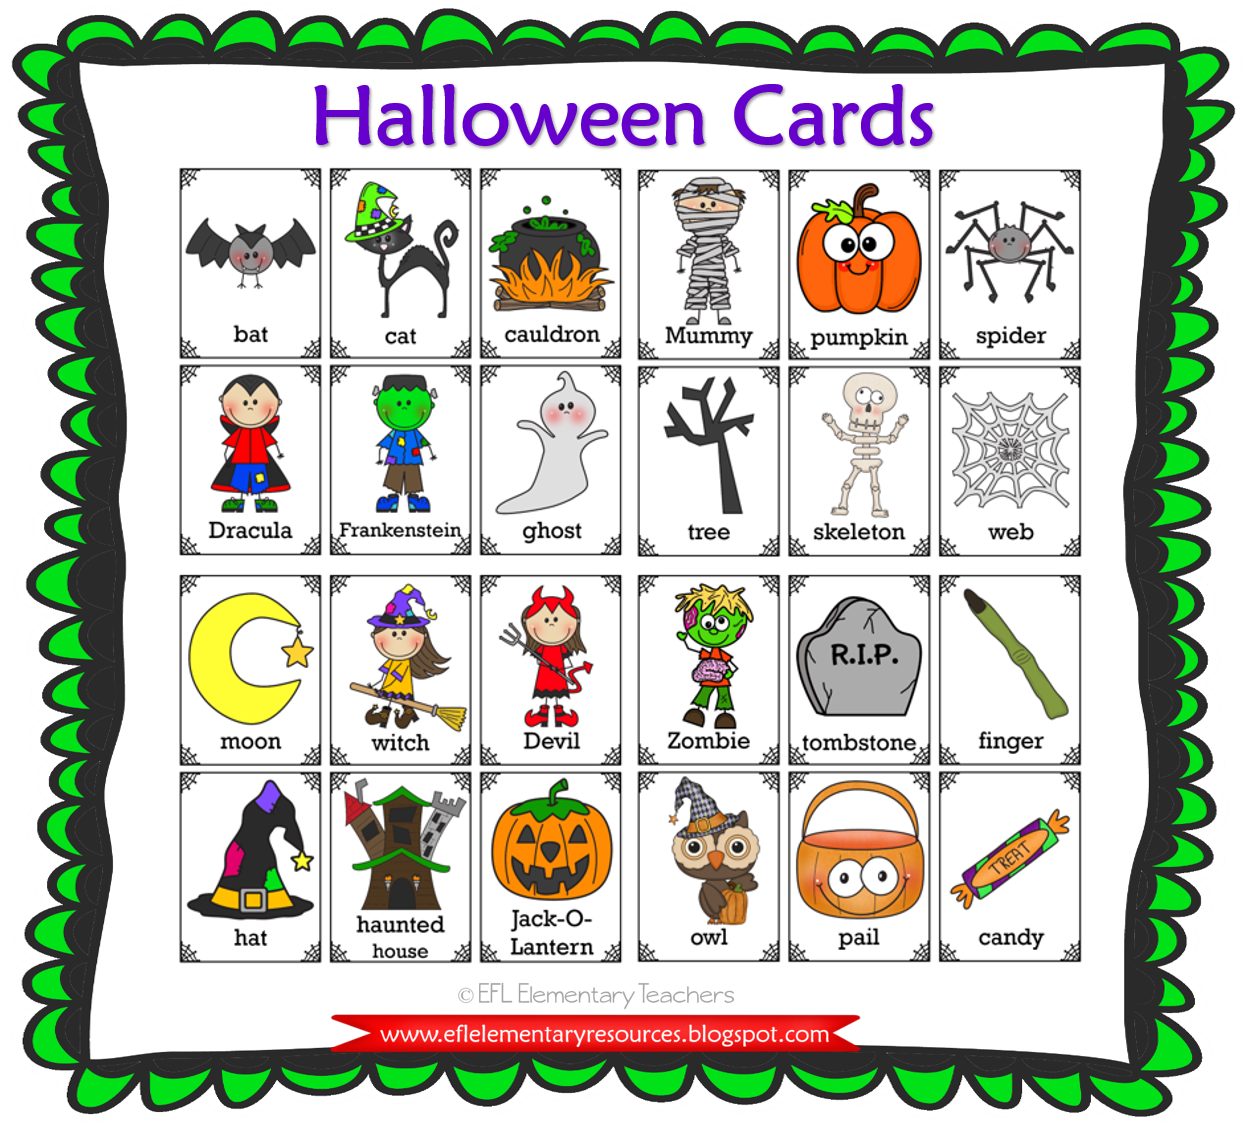 EFL Elementary Teachers: Day 3 of the 31 days of Halloween 2020 New ...